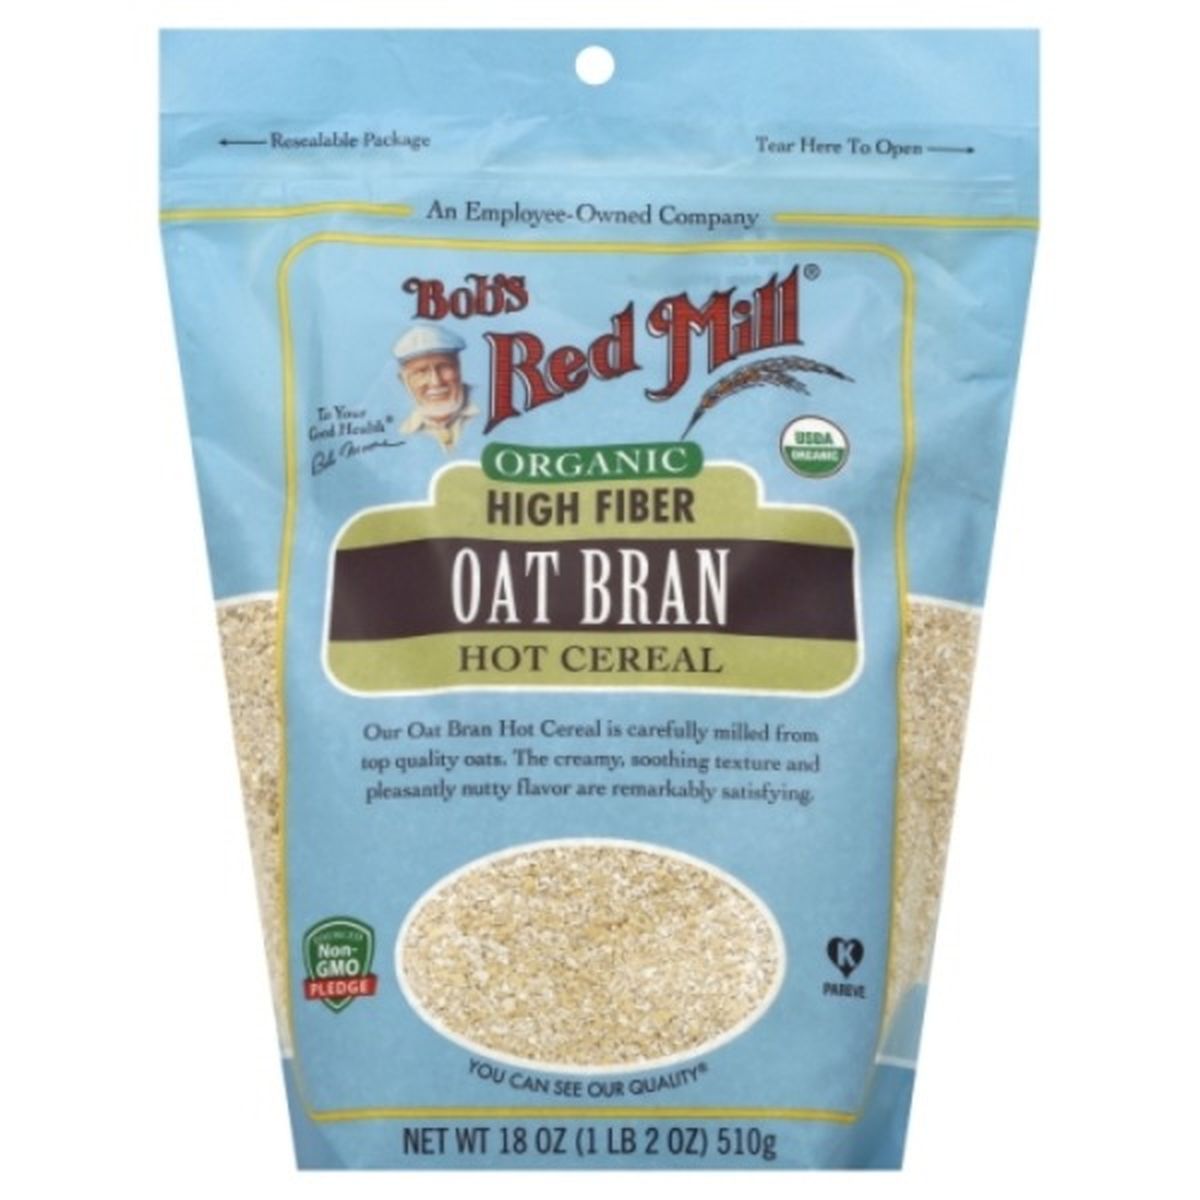 Calories in Bob's Red Mill Organic Hot Cereal, Oat Bran, High Fiber